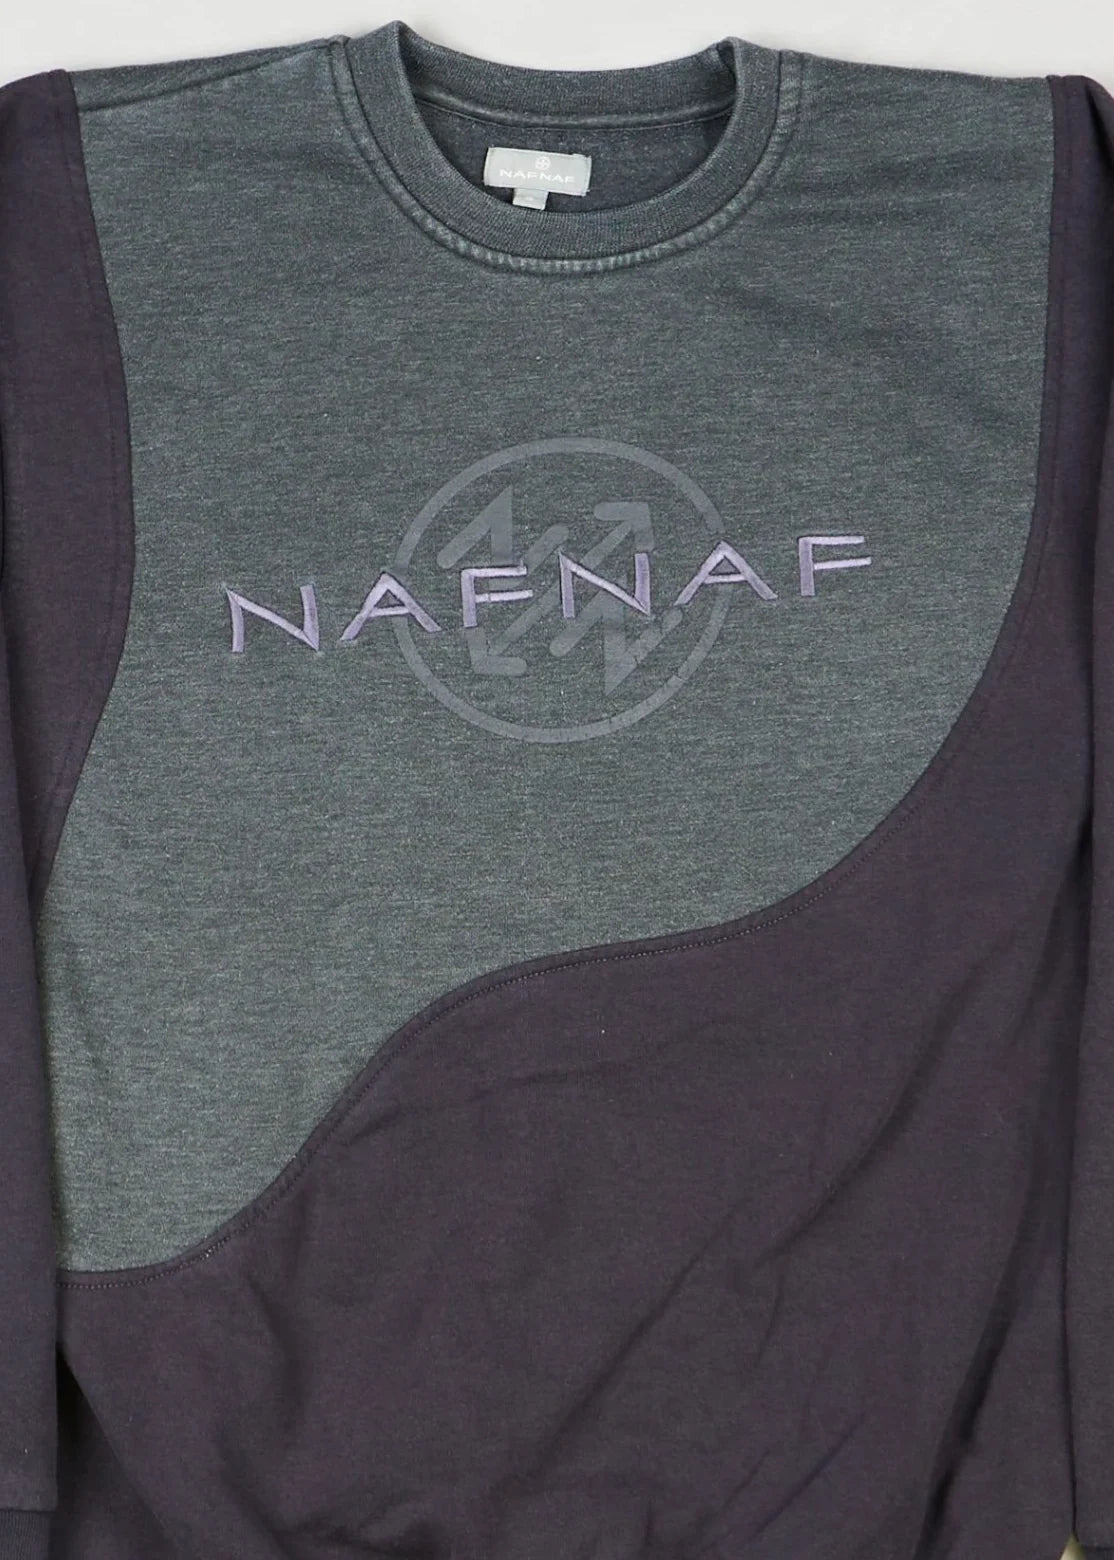 NAFNAF - Sweatshirt (M) Center